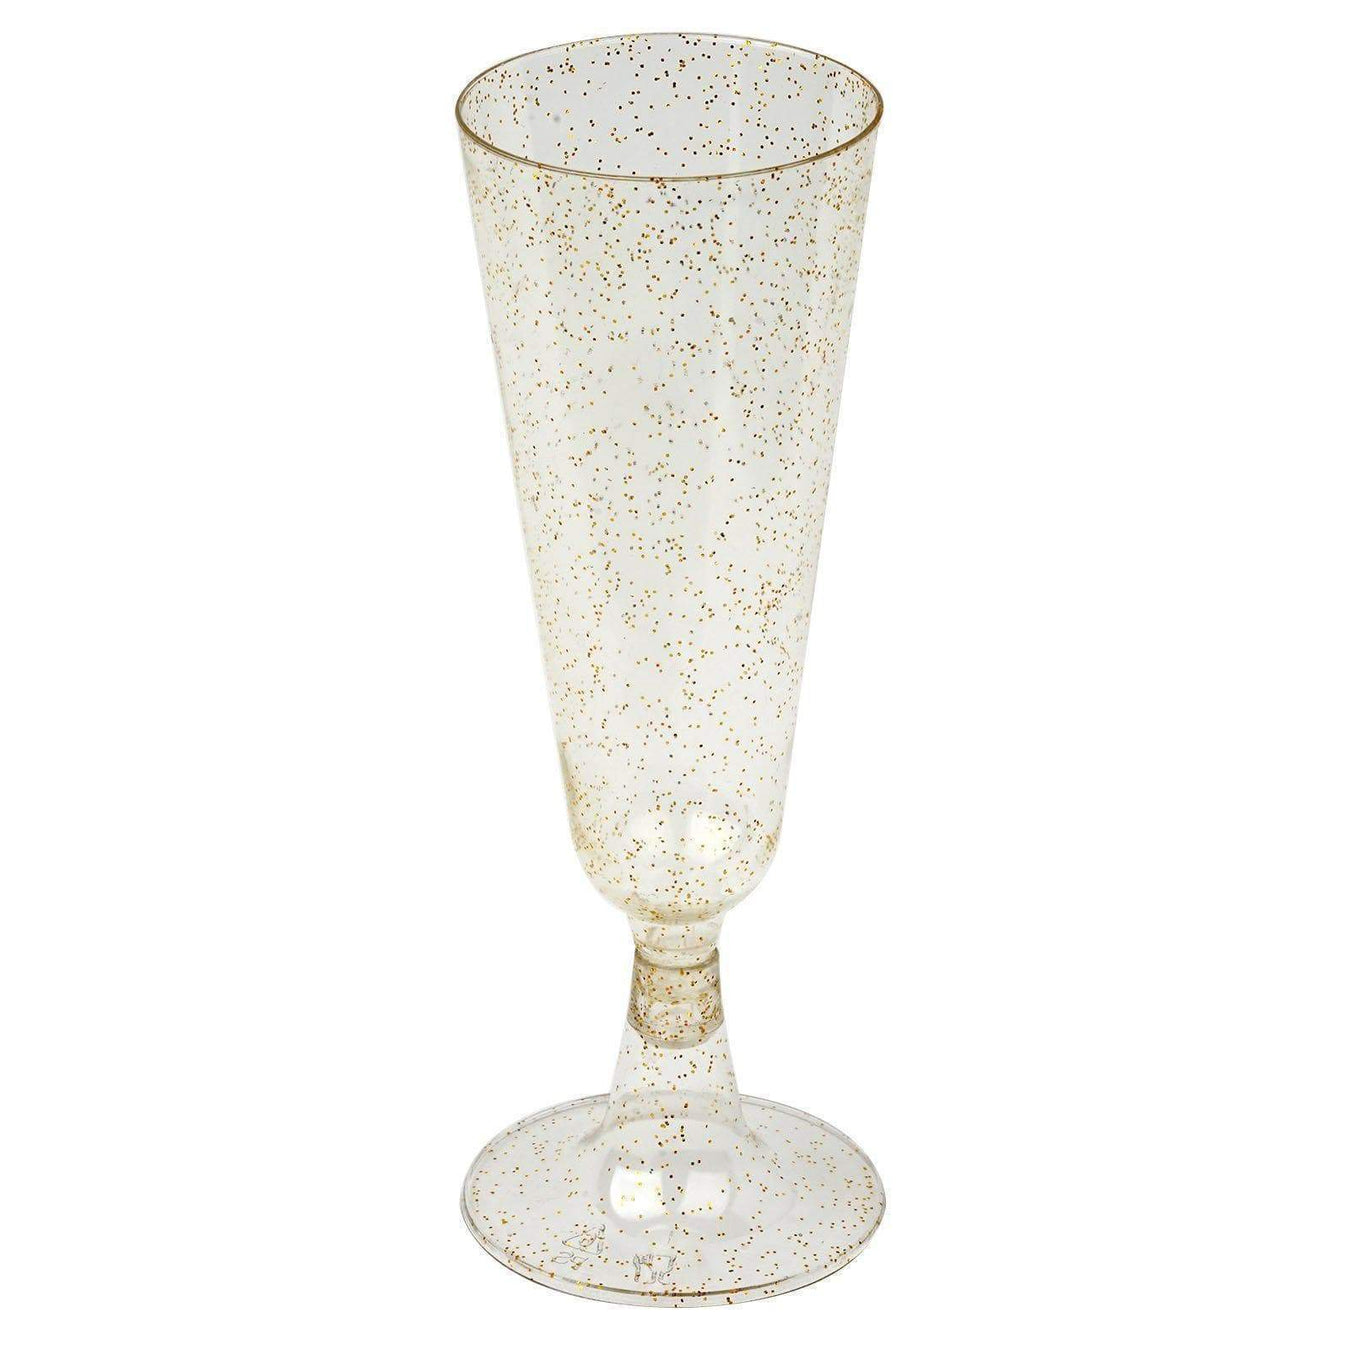 12 5 oz. Glittered Clear Champagne Plastic Flutes Glasses